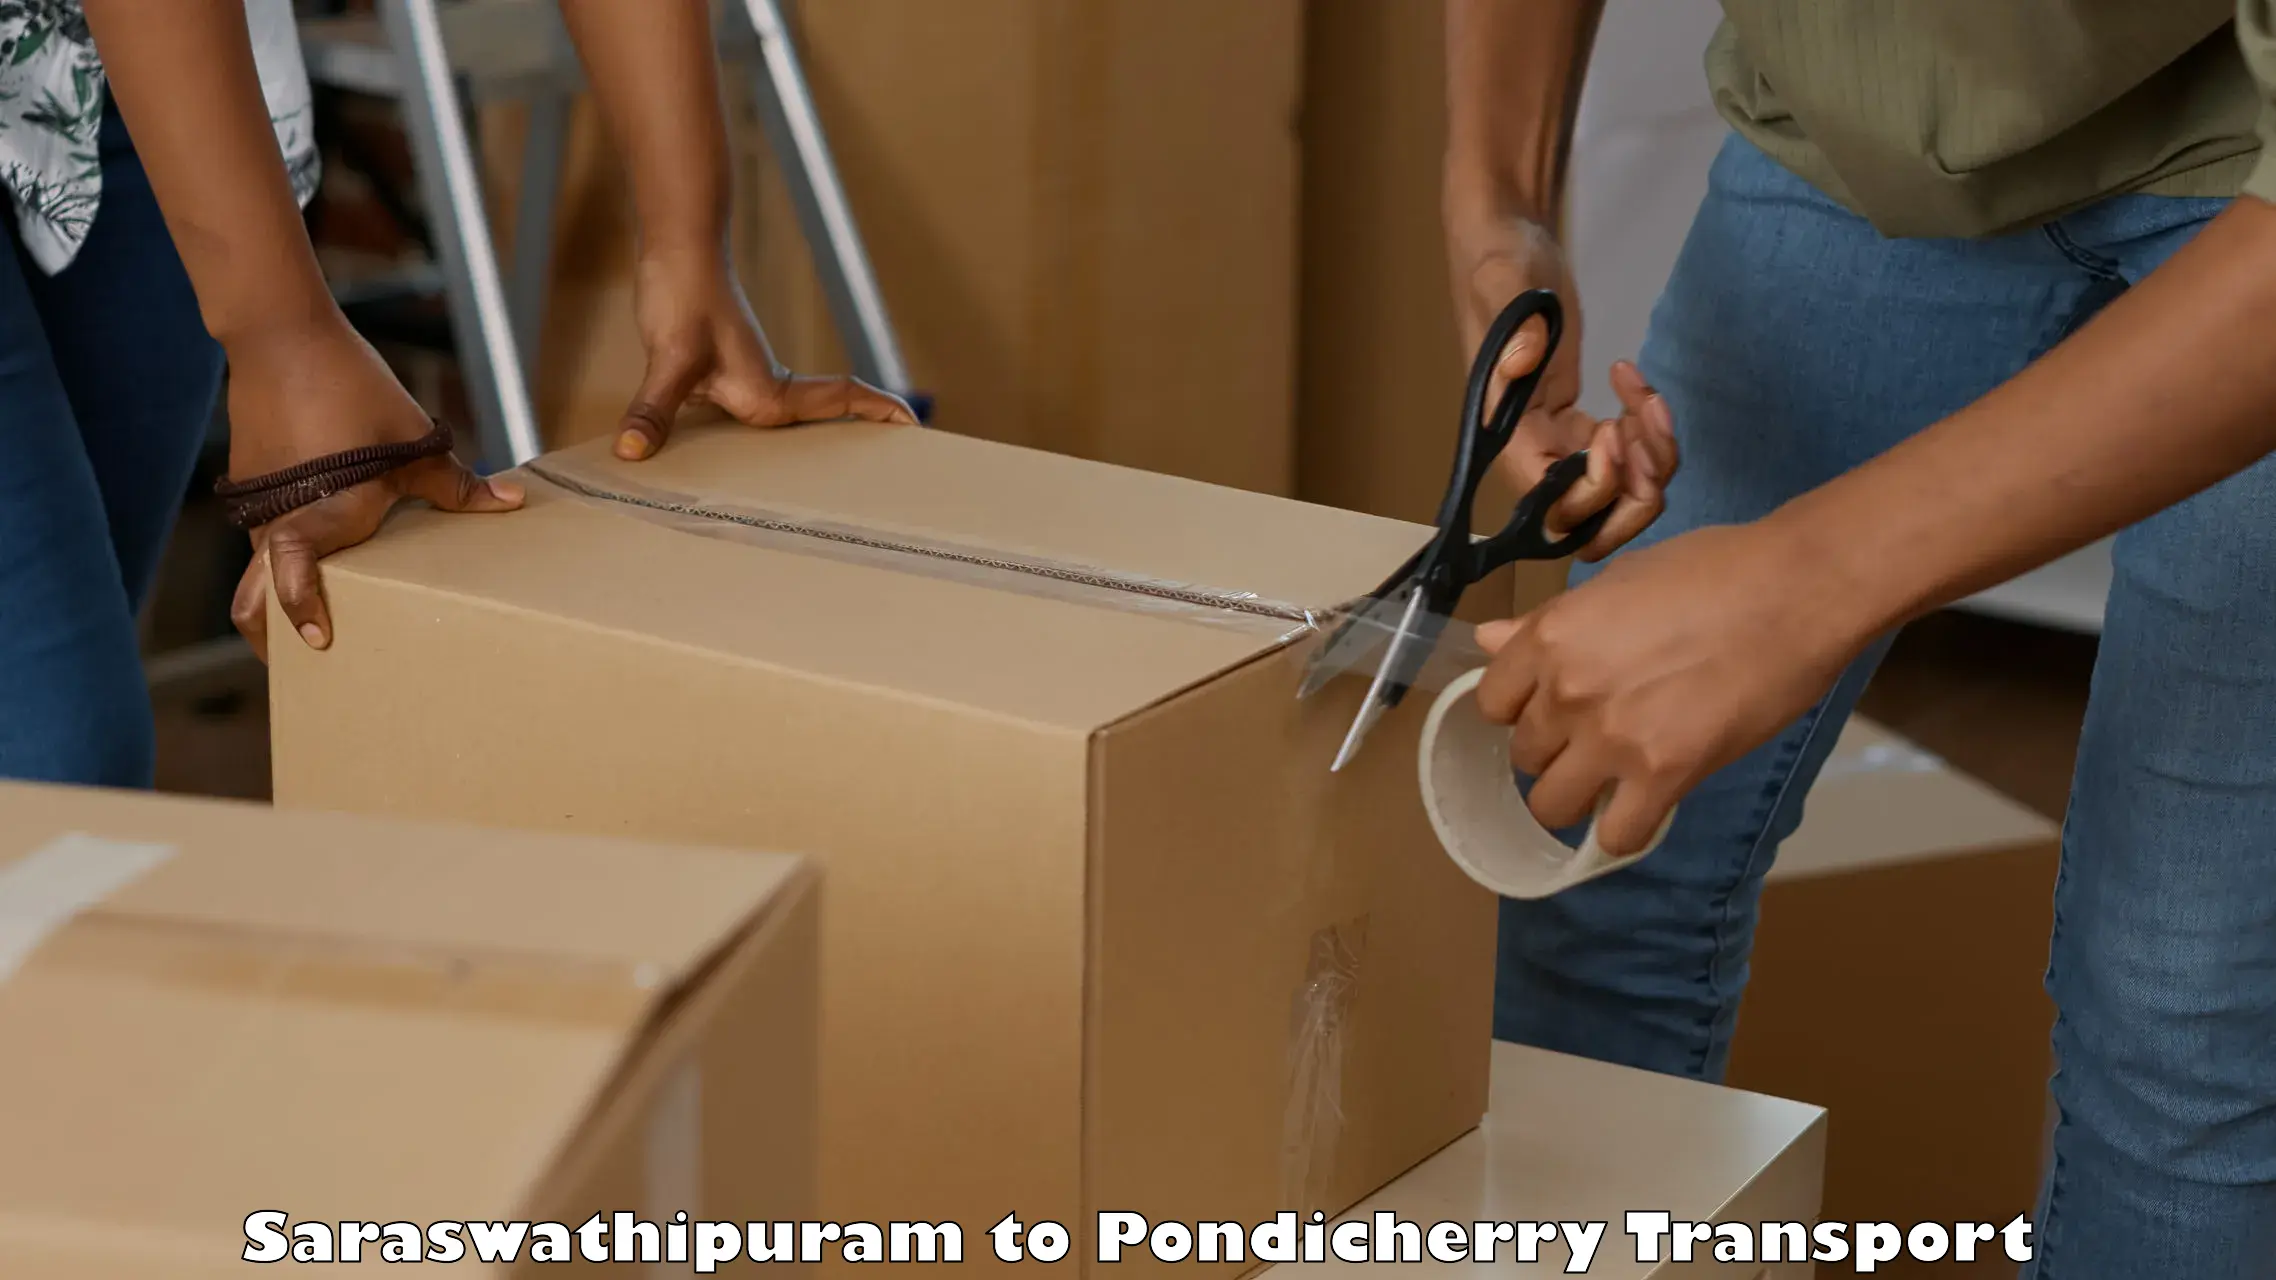 Commercial transport service Saraswathipuram to Pondicherry